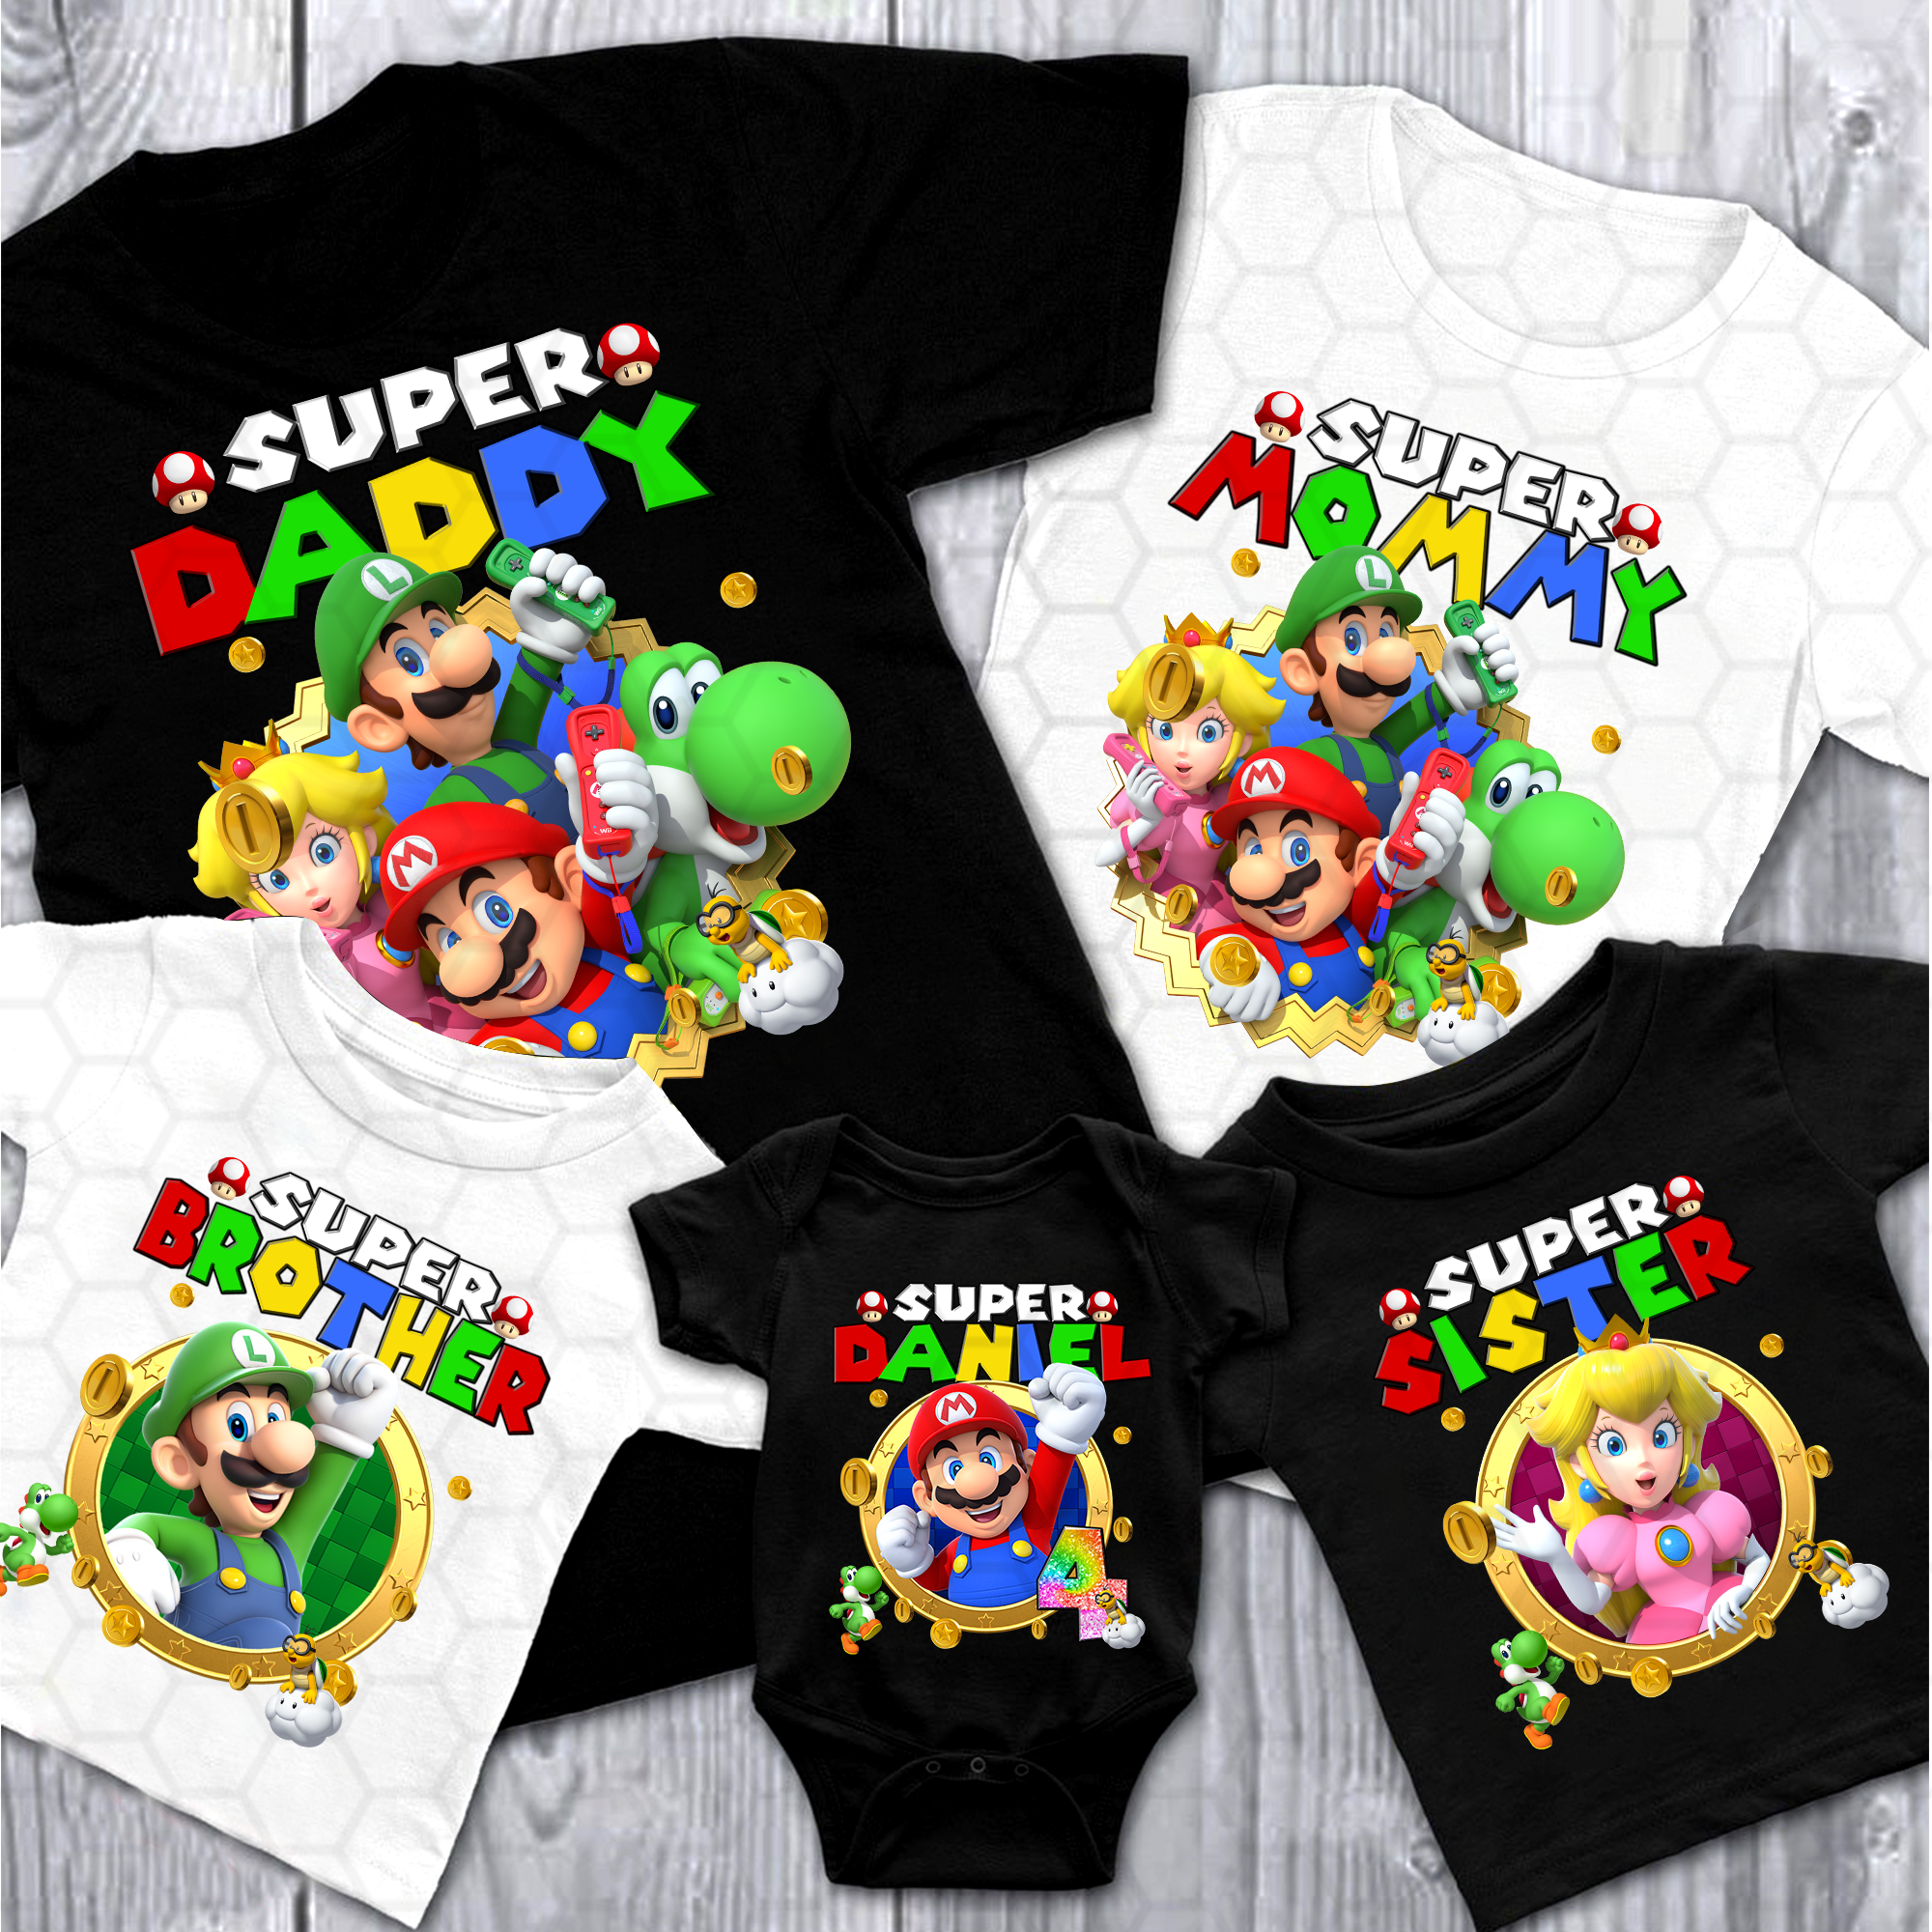 Super Mario Birthday Shirt, Super Mario Bros Birthday shirt, Super Mario Family Matching Shirt, Super Mario Shirt